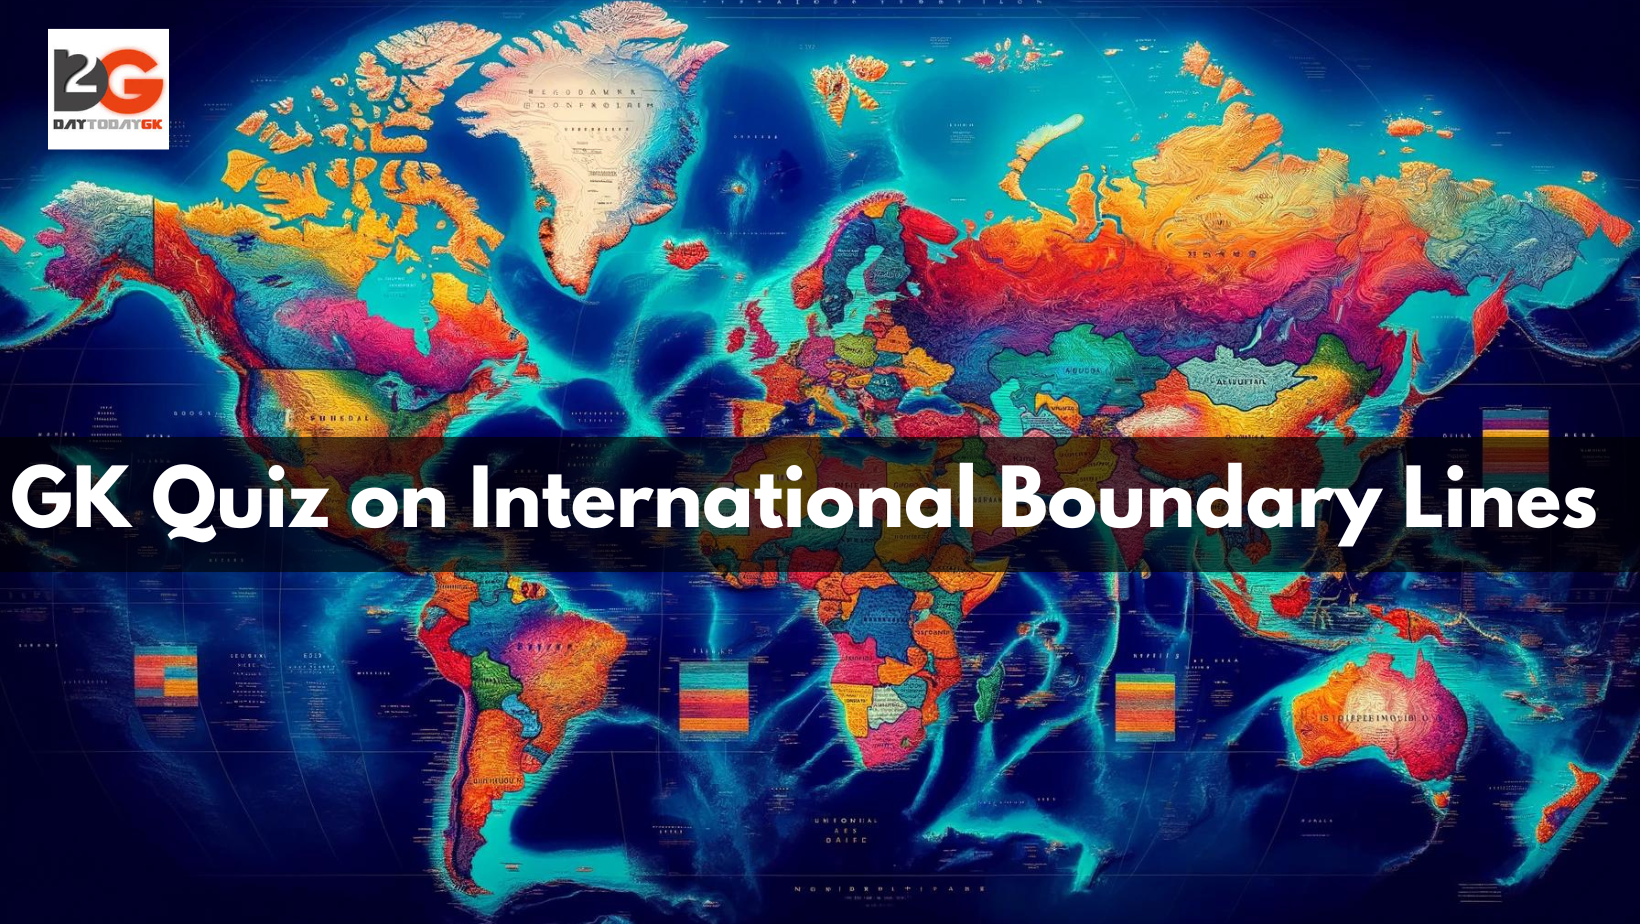 GK Quiz on International Boundary Lines